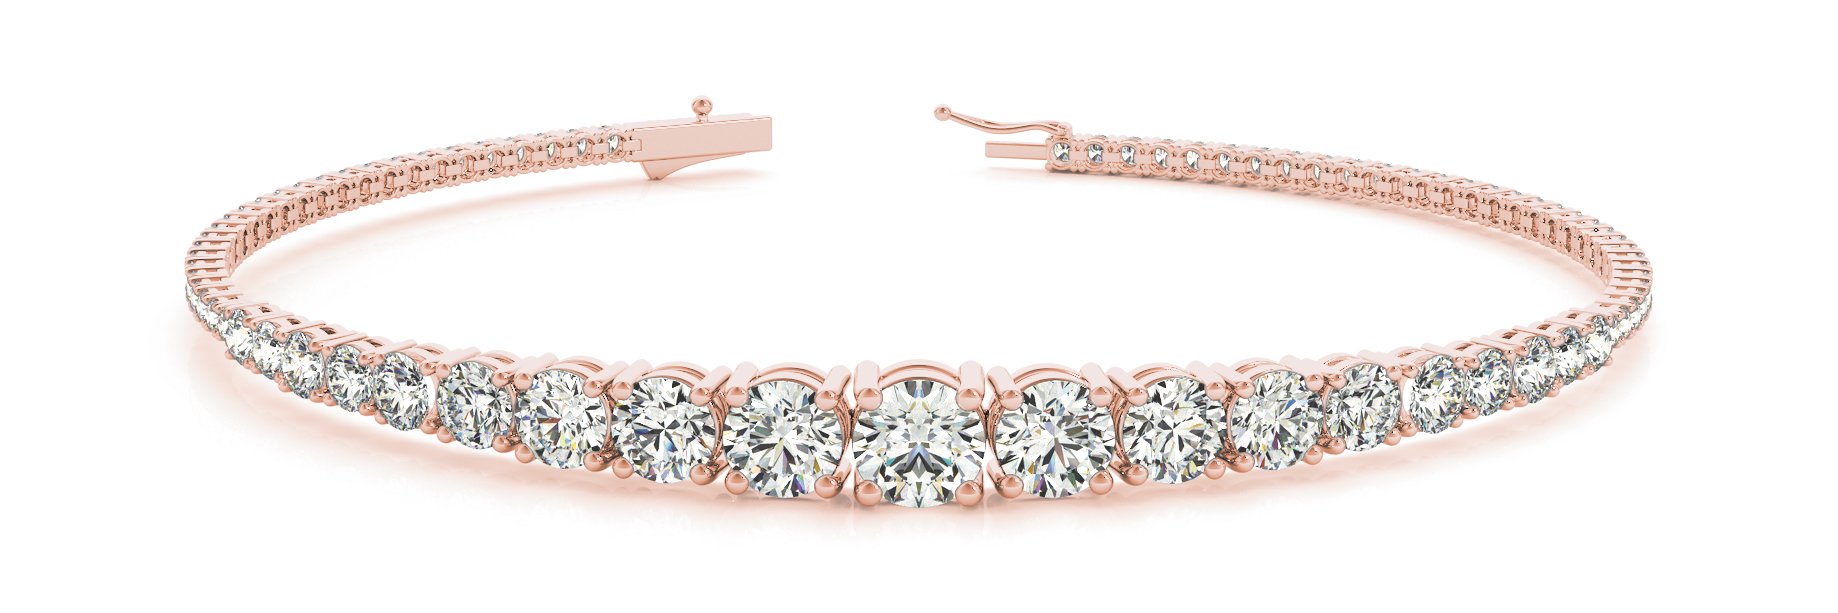 Fancy Diamond Bracelet Ladies 3.51ct tw - 14kt Rose Gold